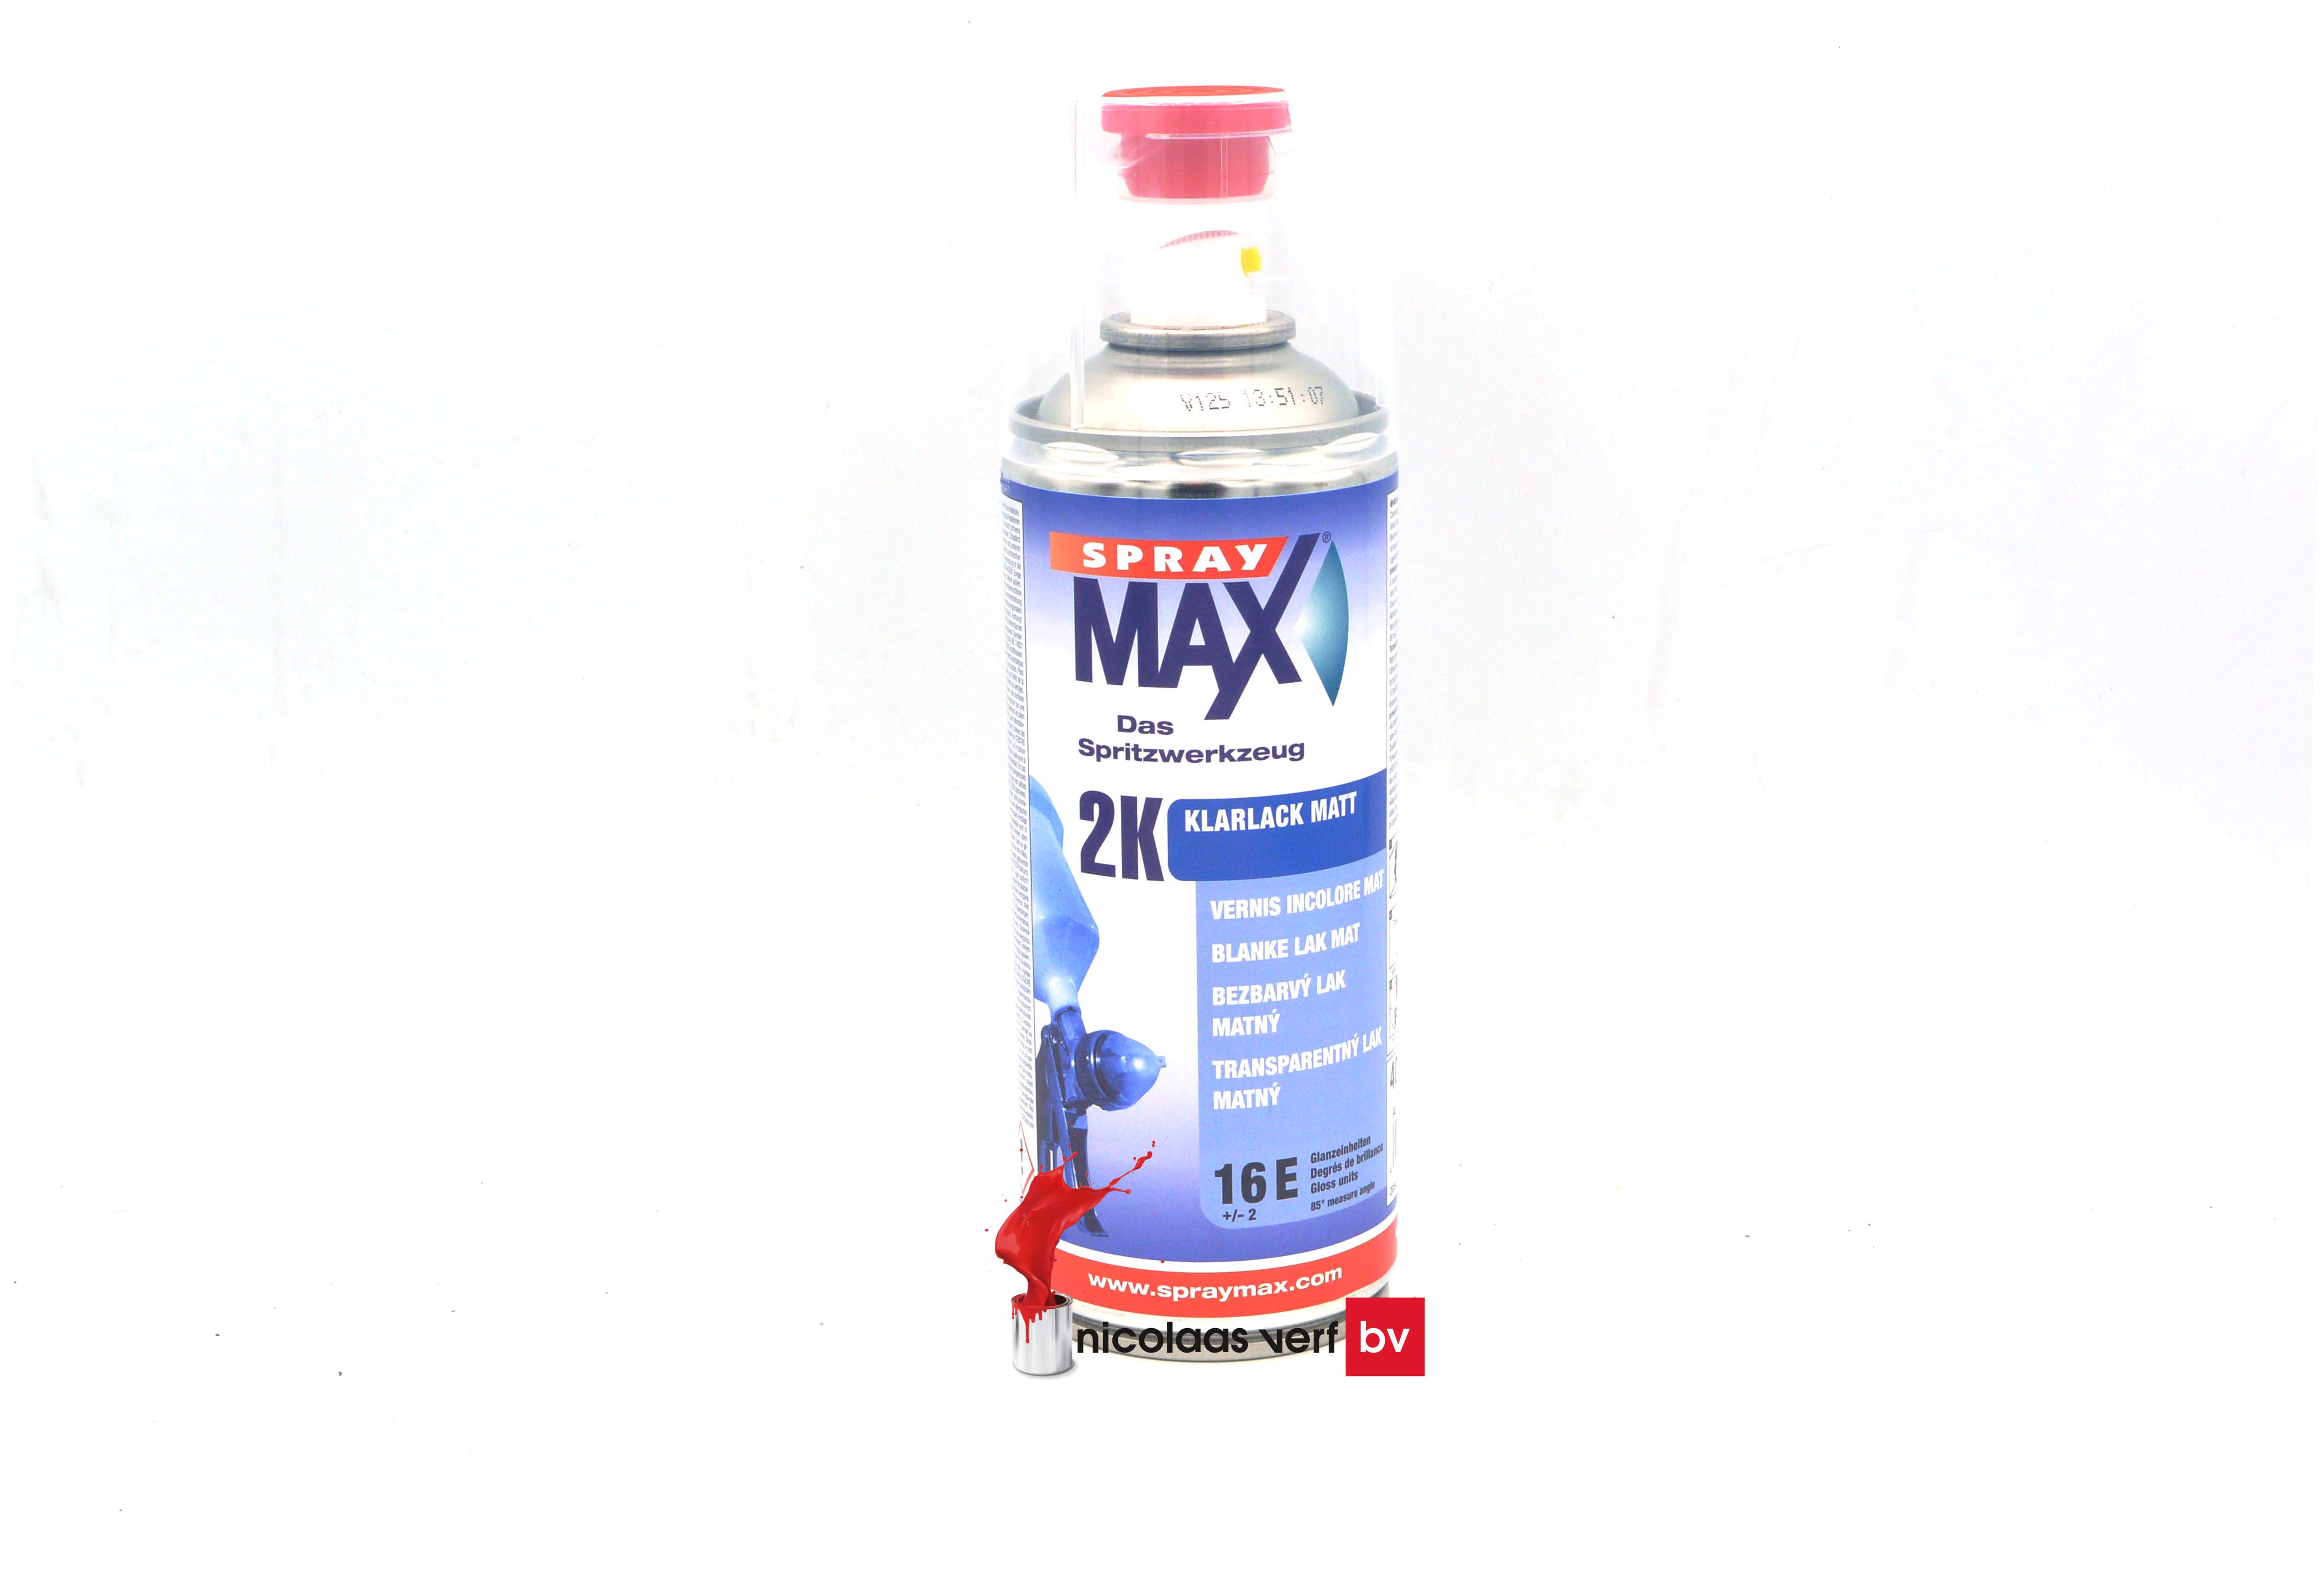 Spray MAX 2K Lak Mat Spuitbus 400 ml | Nicolaas